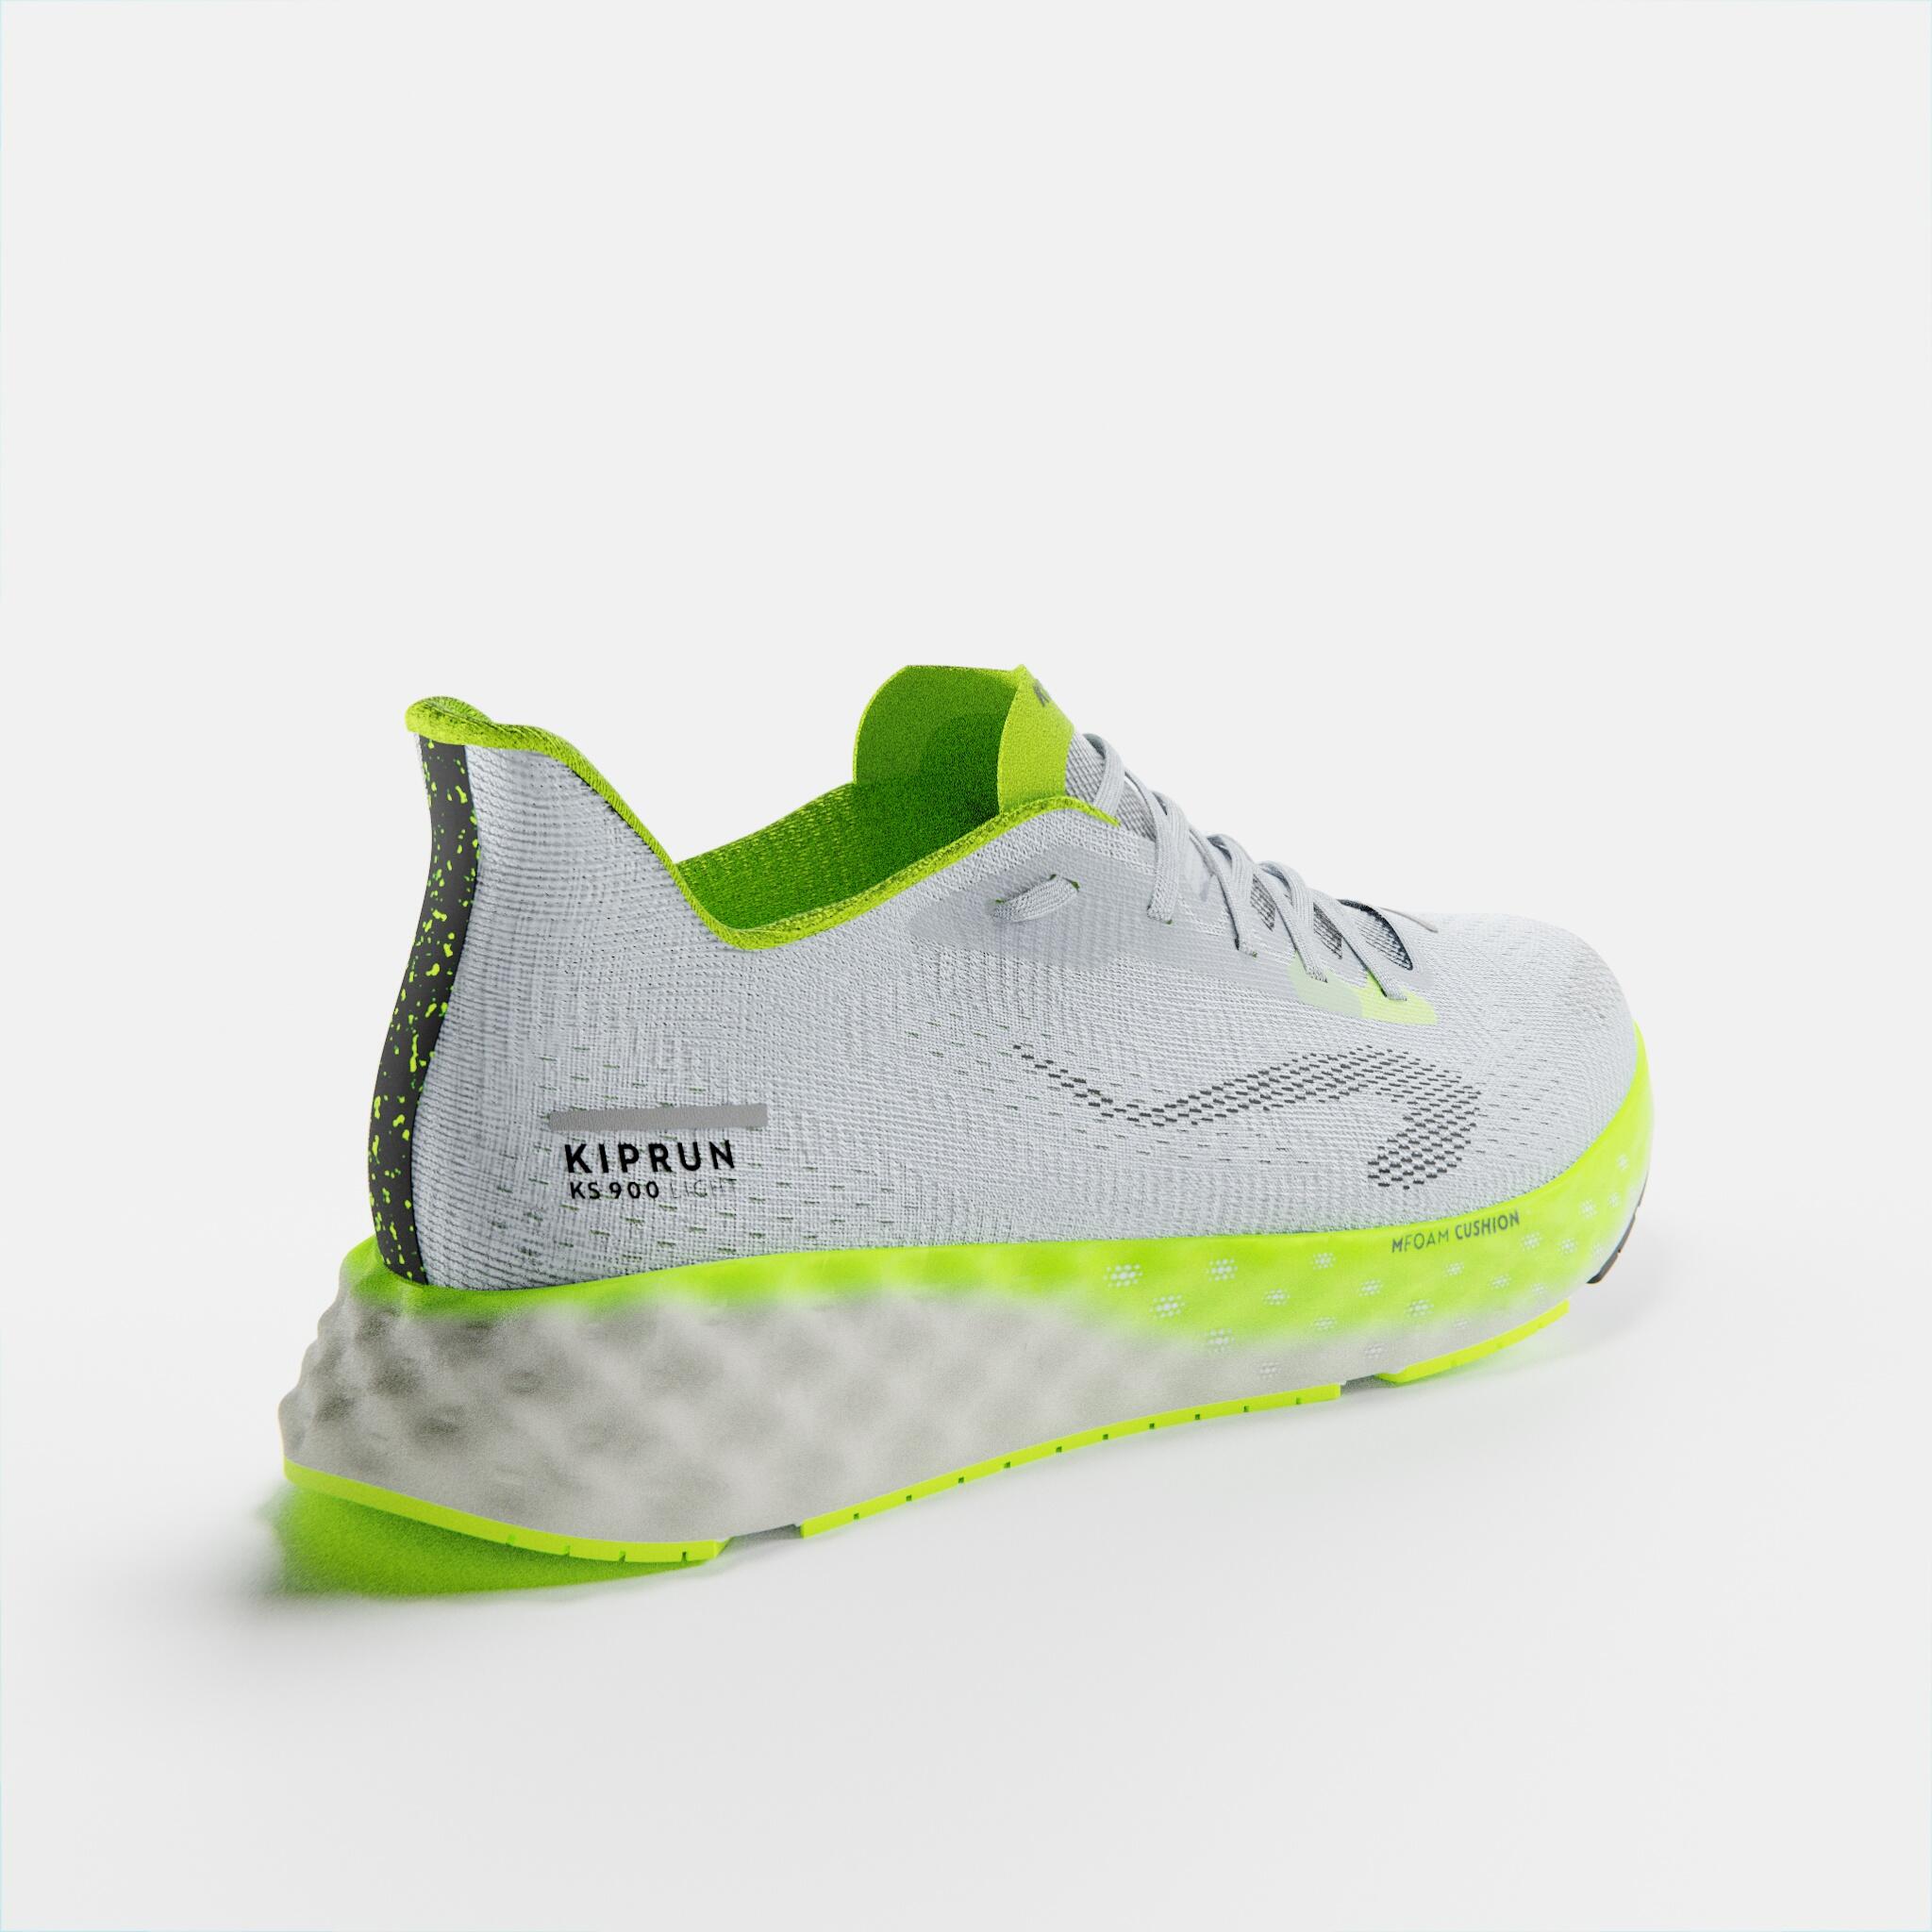 Men's KIPRUN KS900 Light running shoes - Grey/Yellow 10/12